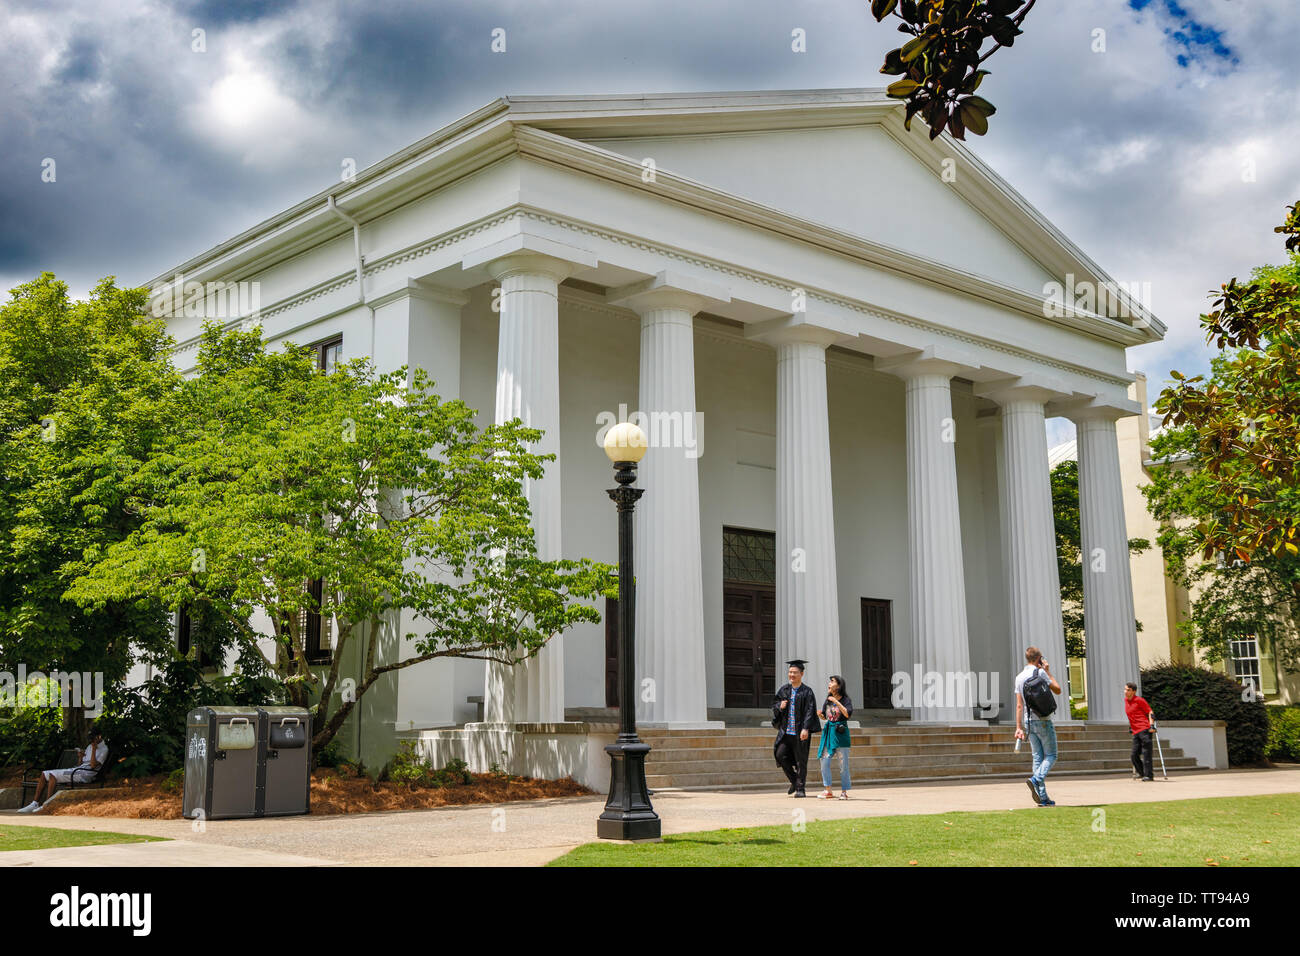 ATHENS, GA, USA - May 3: Chapel on May 3, 2019 at the University of Georgia, North Campus in Athens, Georgia. Stock Photo